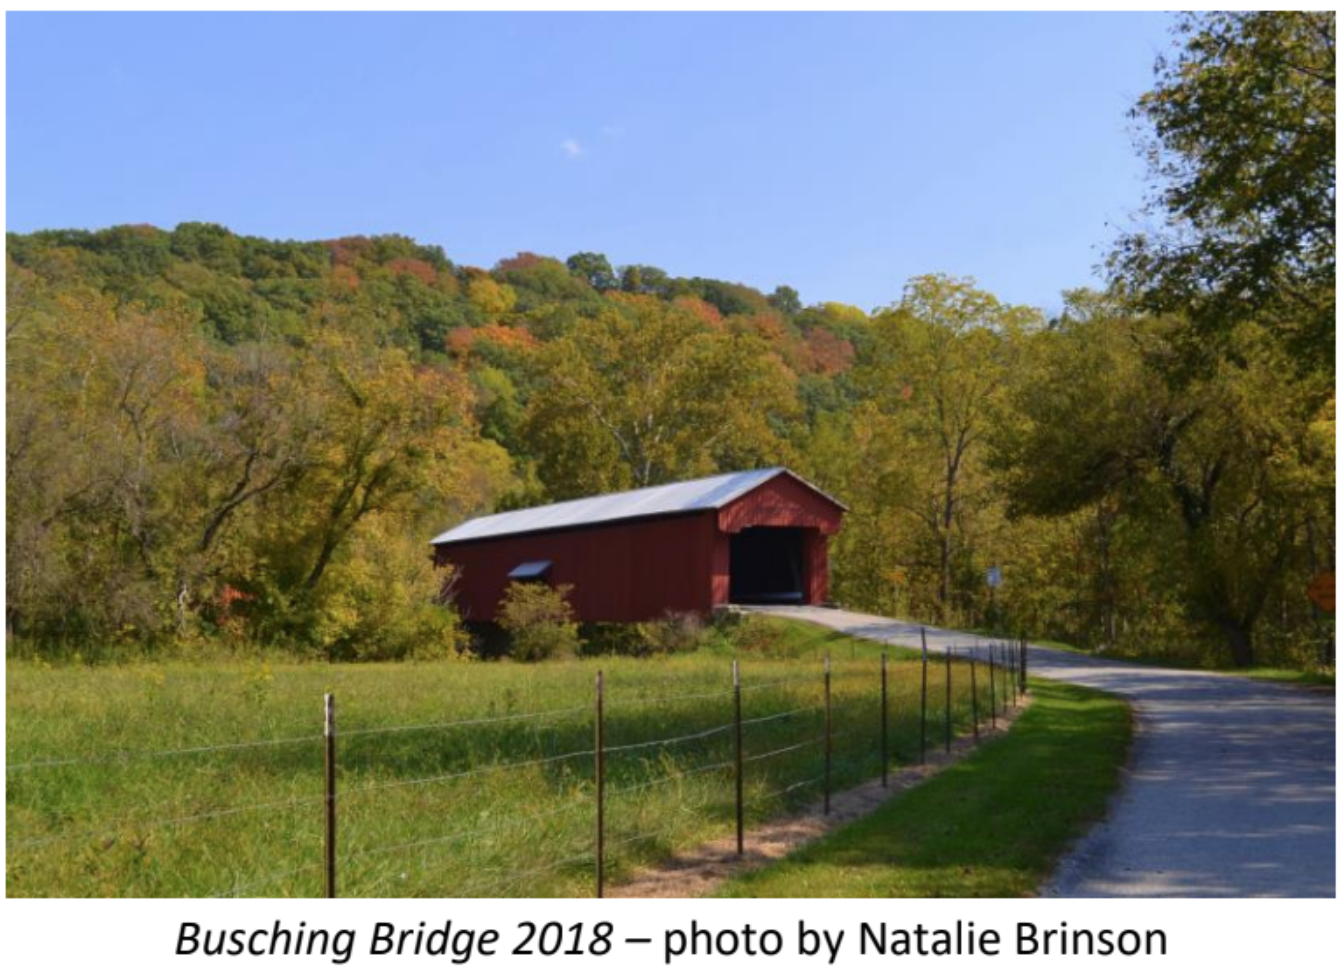 Busching bridge 2018